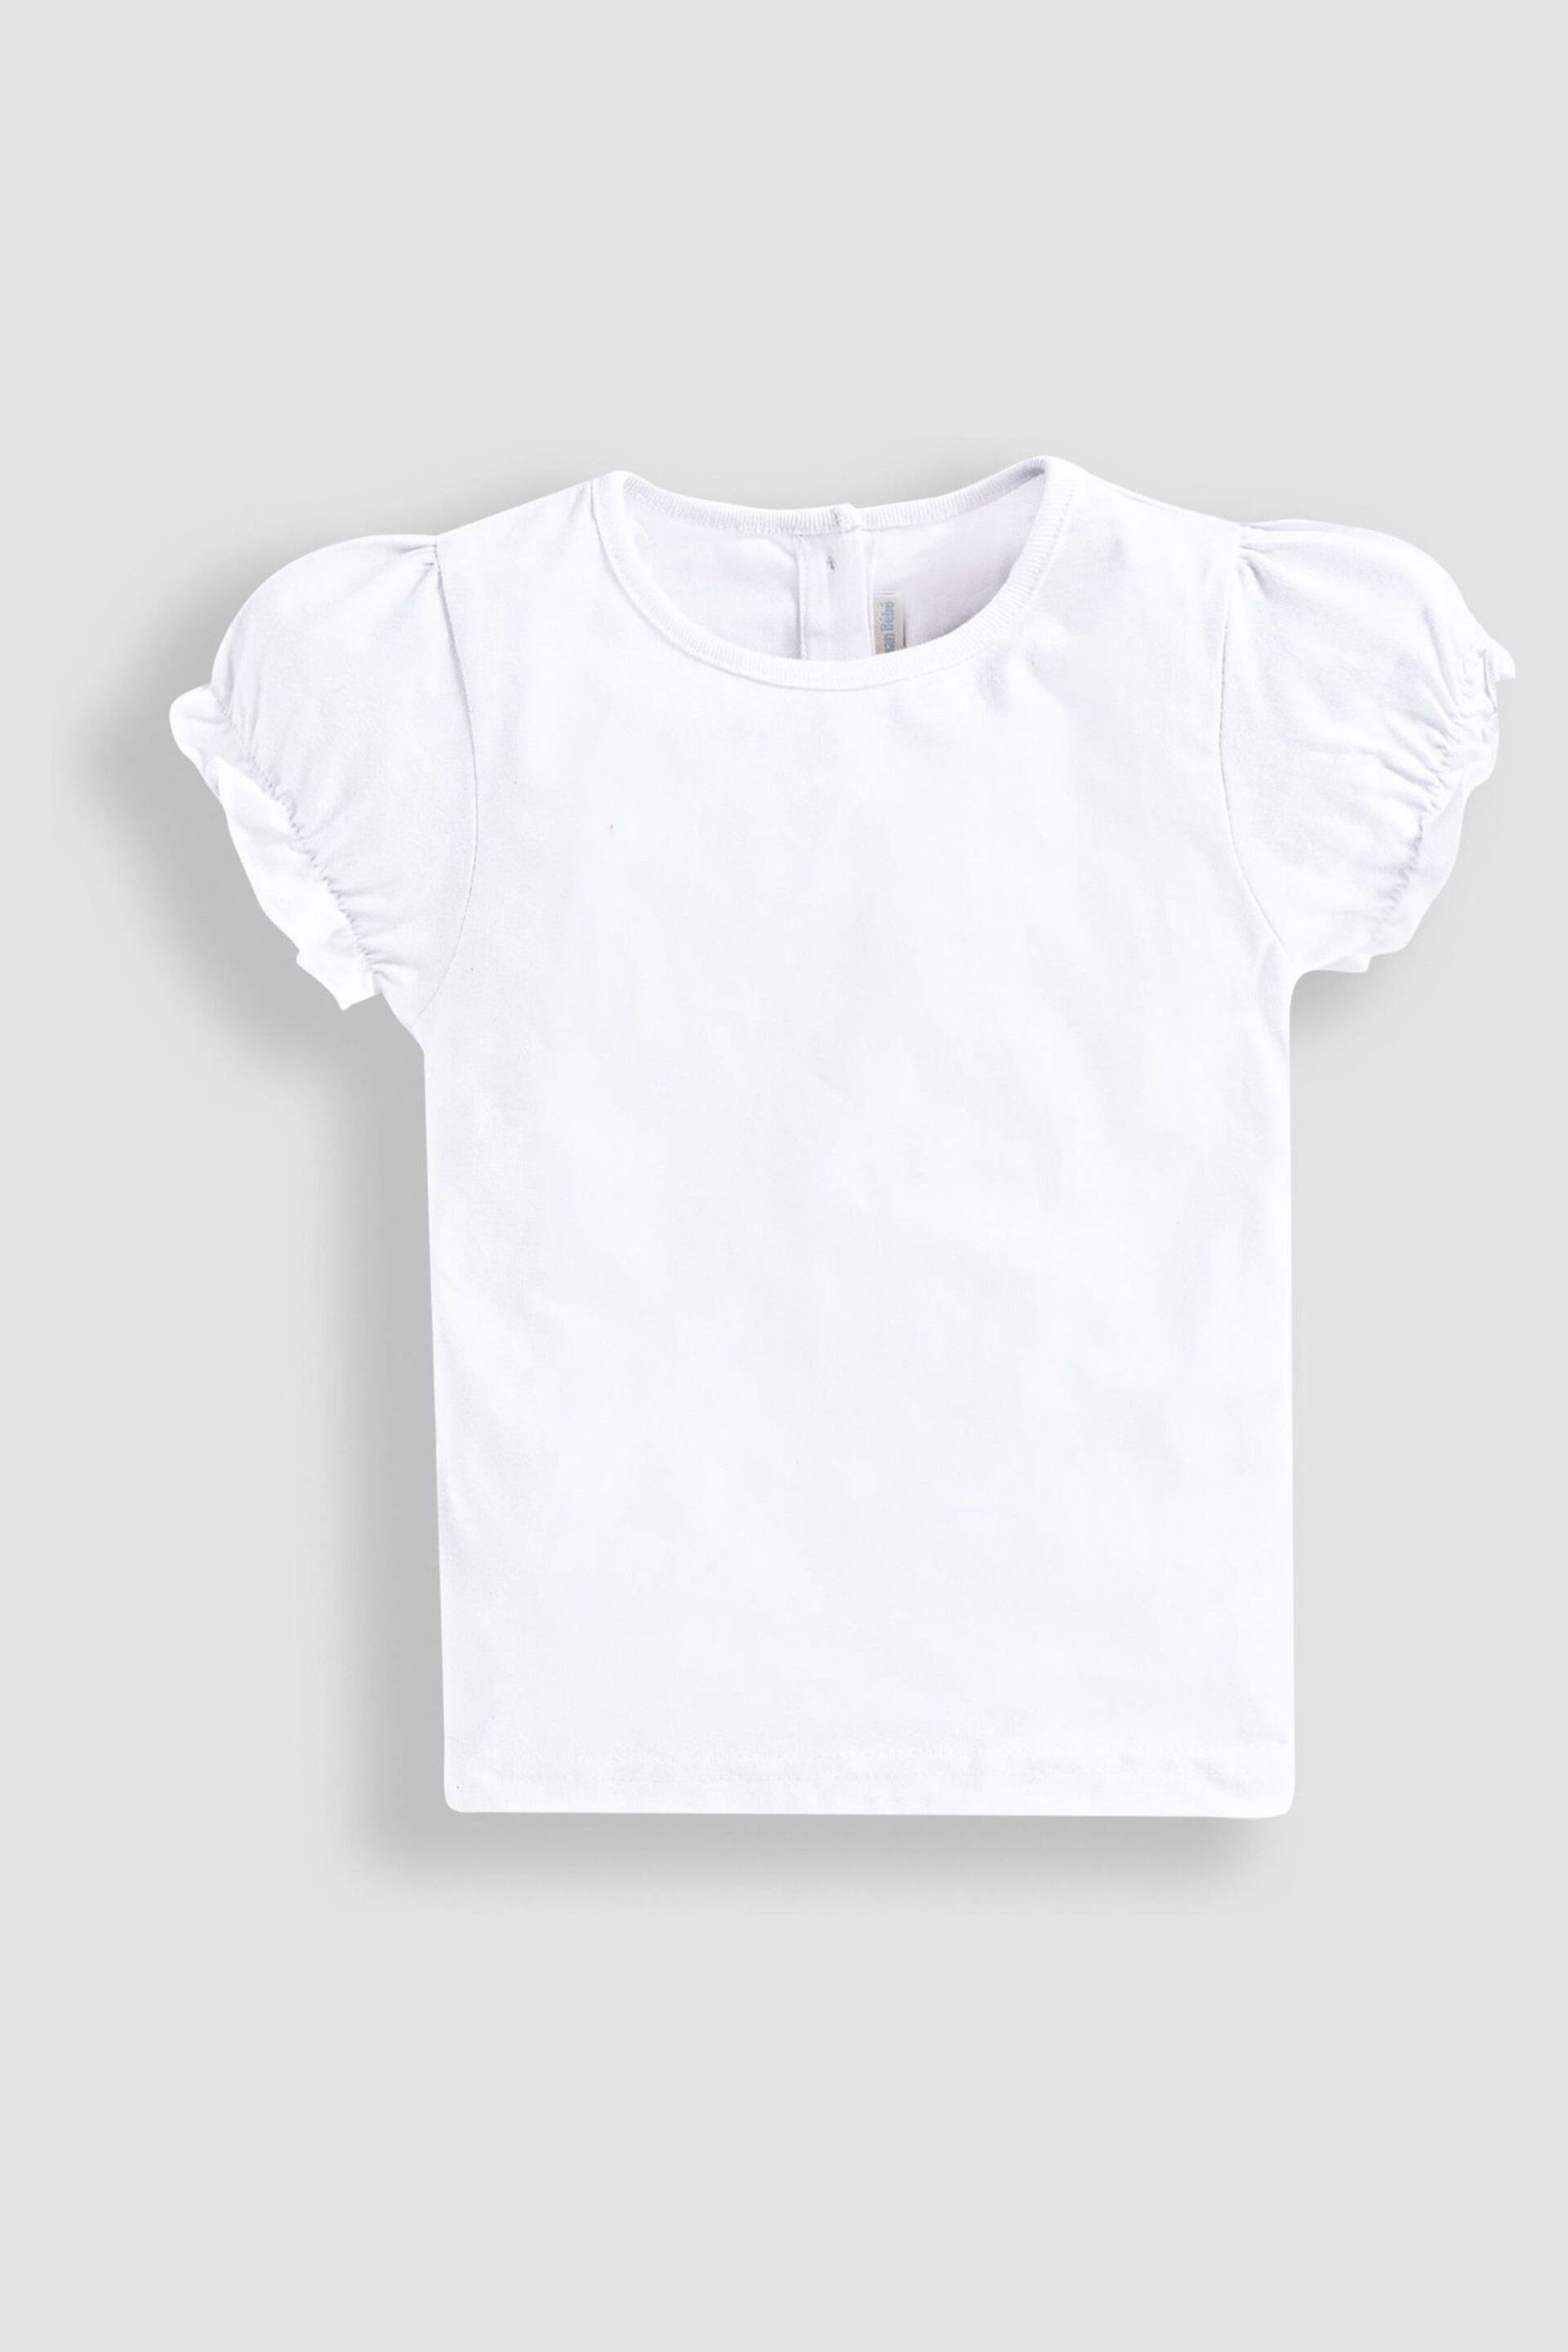 JoJo Maman Bébé White Pretty T-Shirt - Image 4 of 6